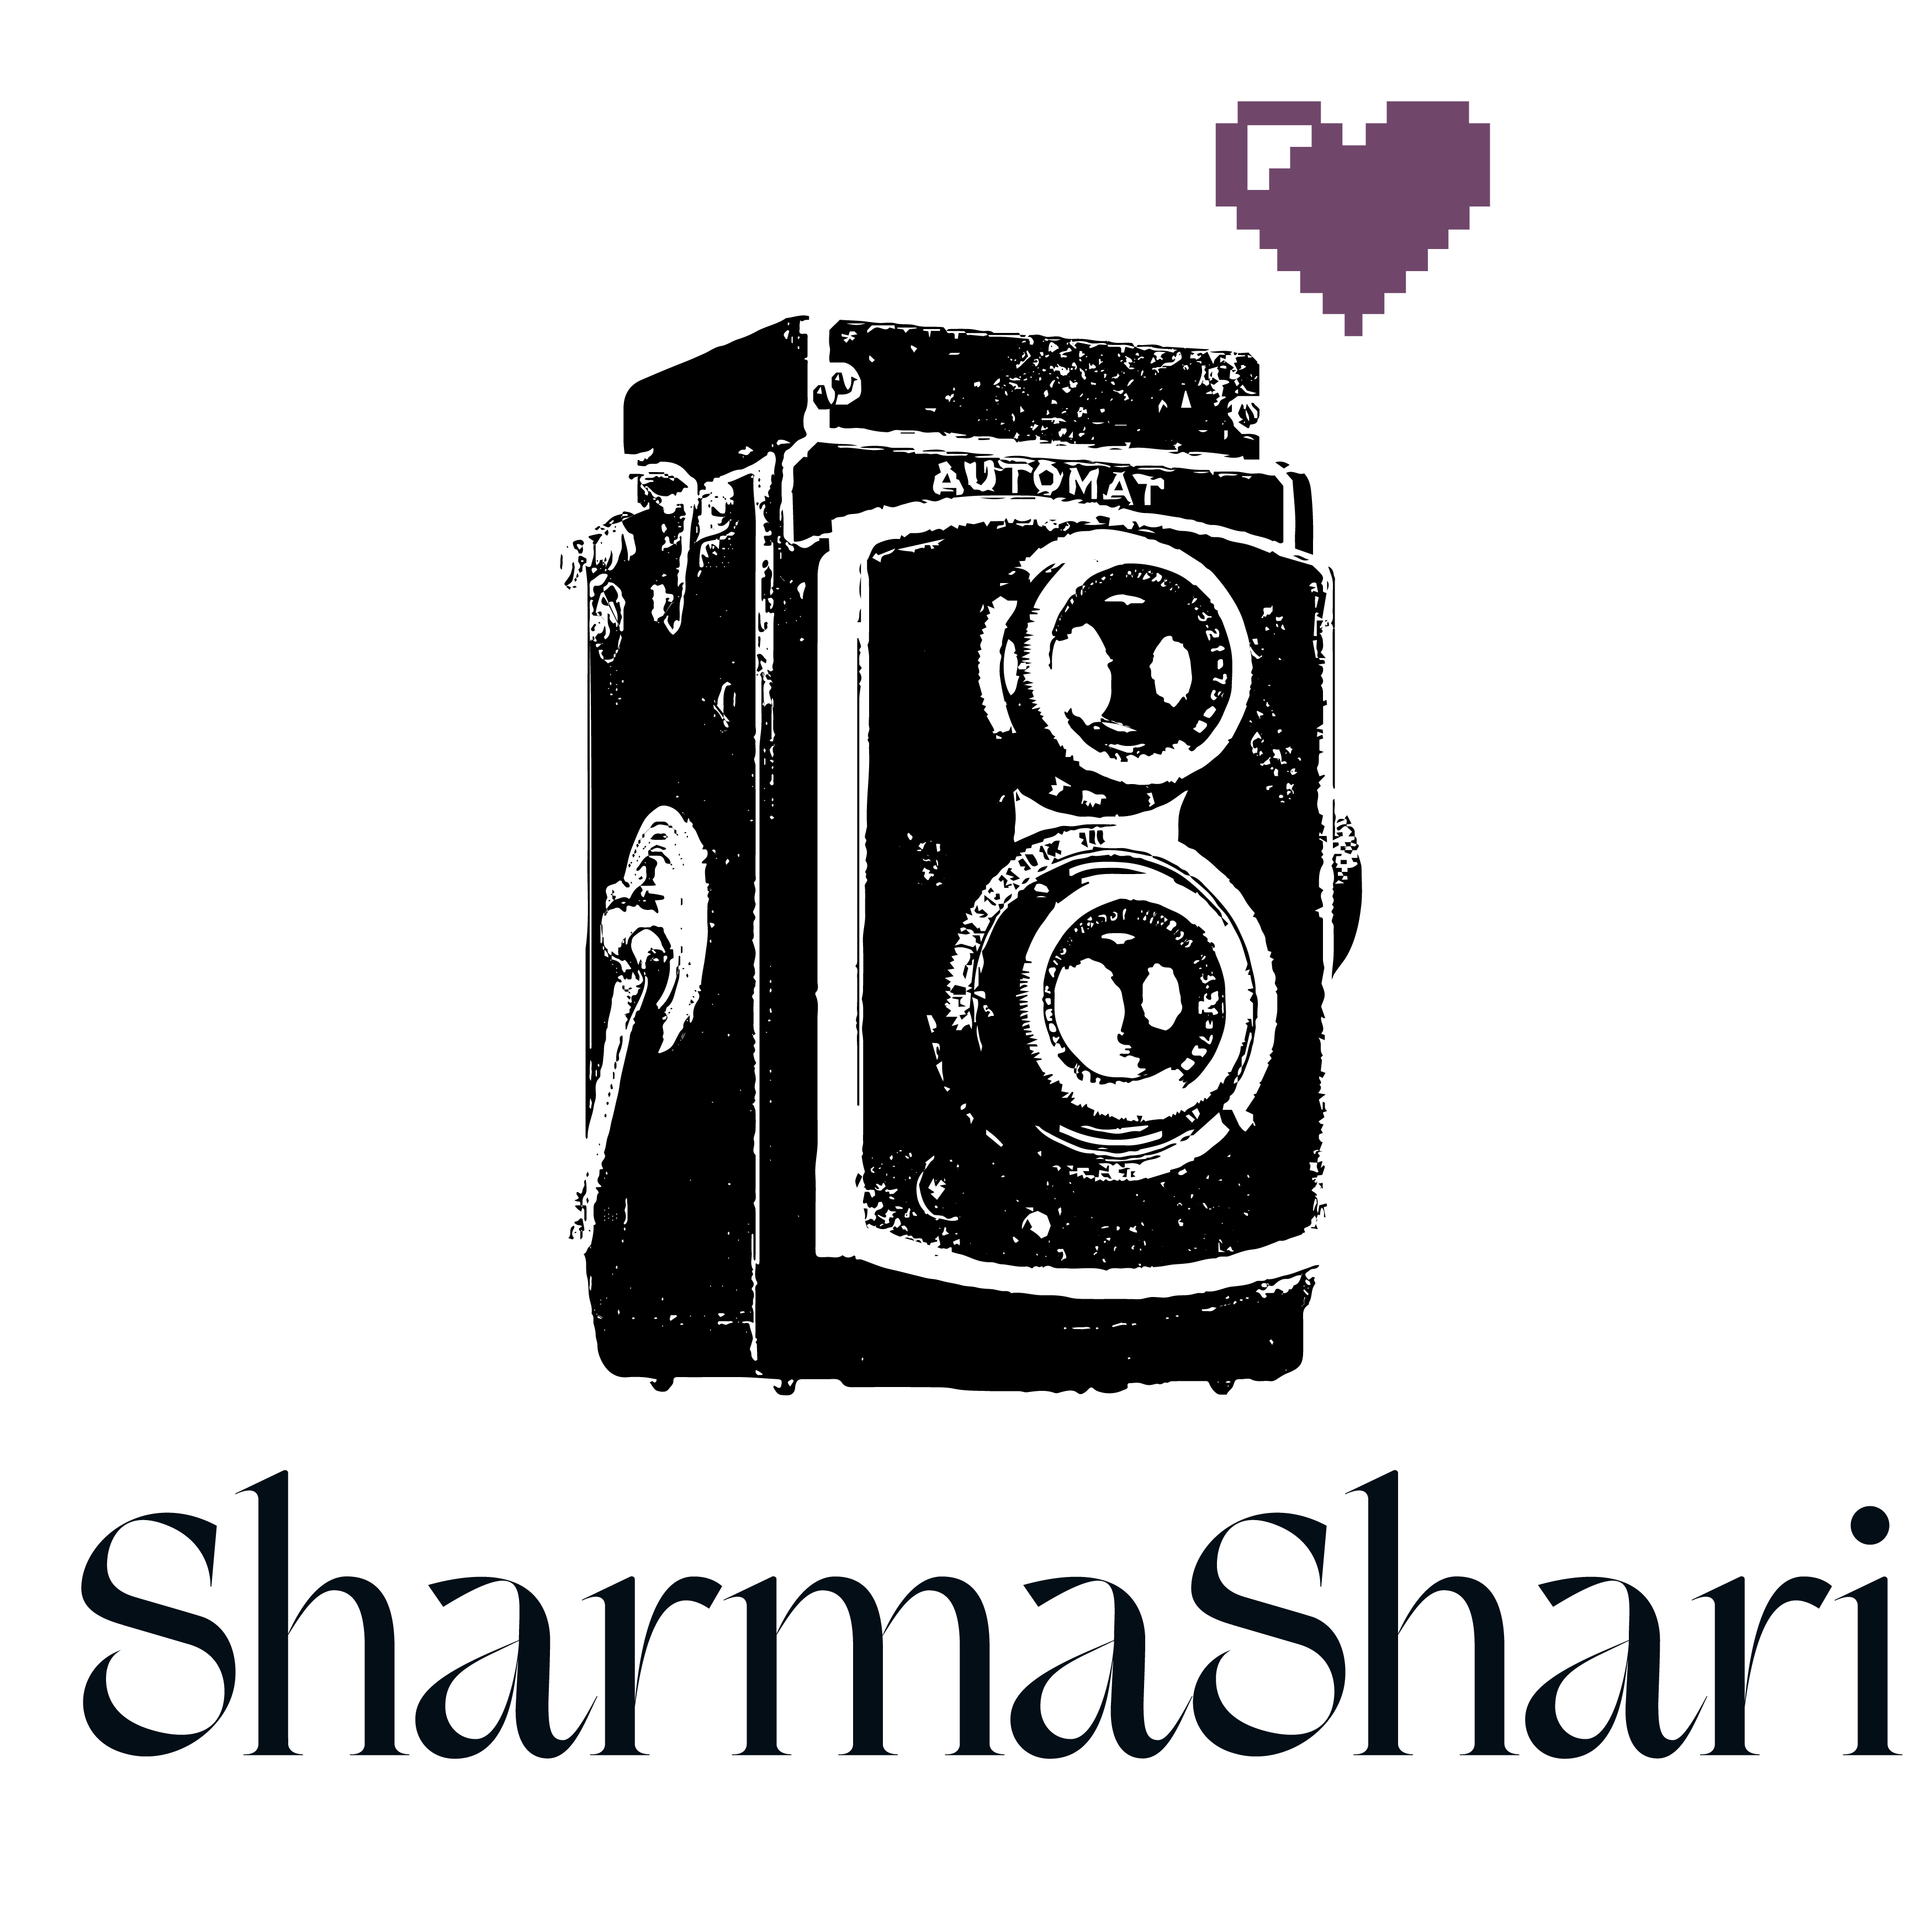 The Art of Sharma Shari